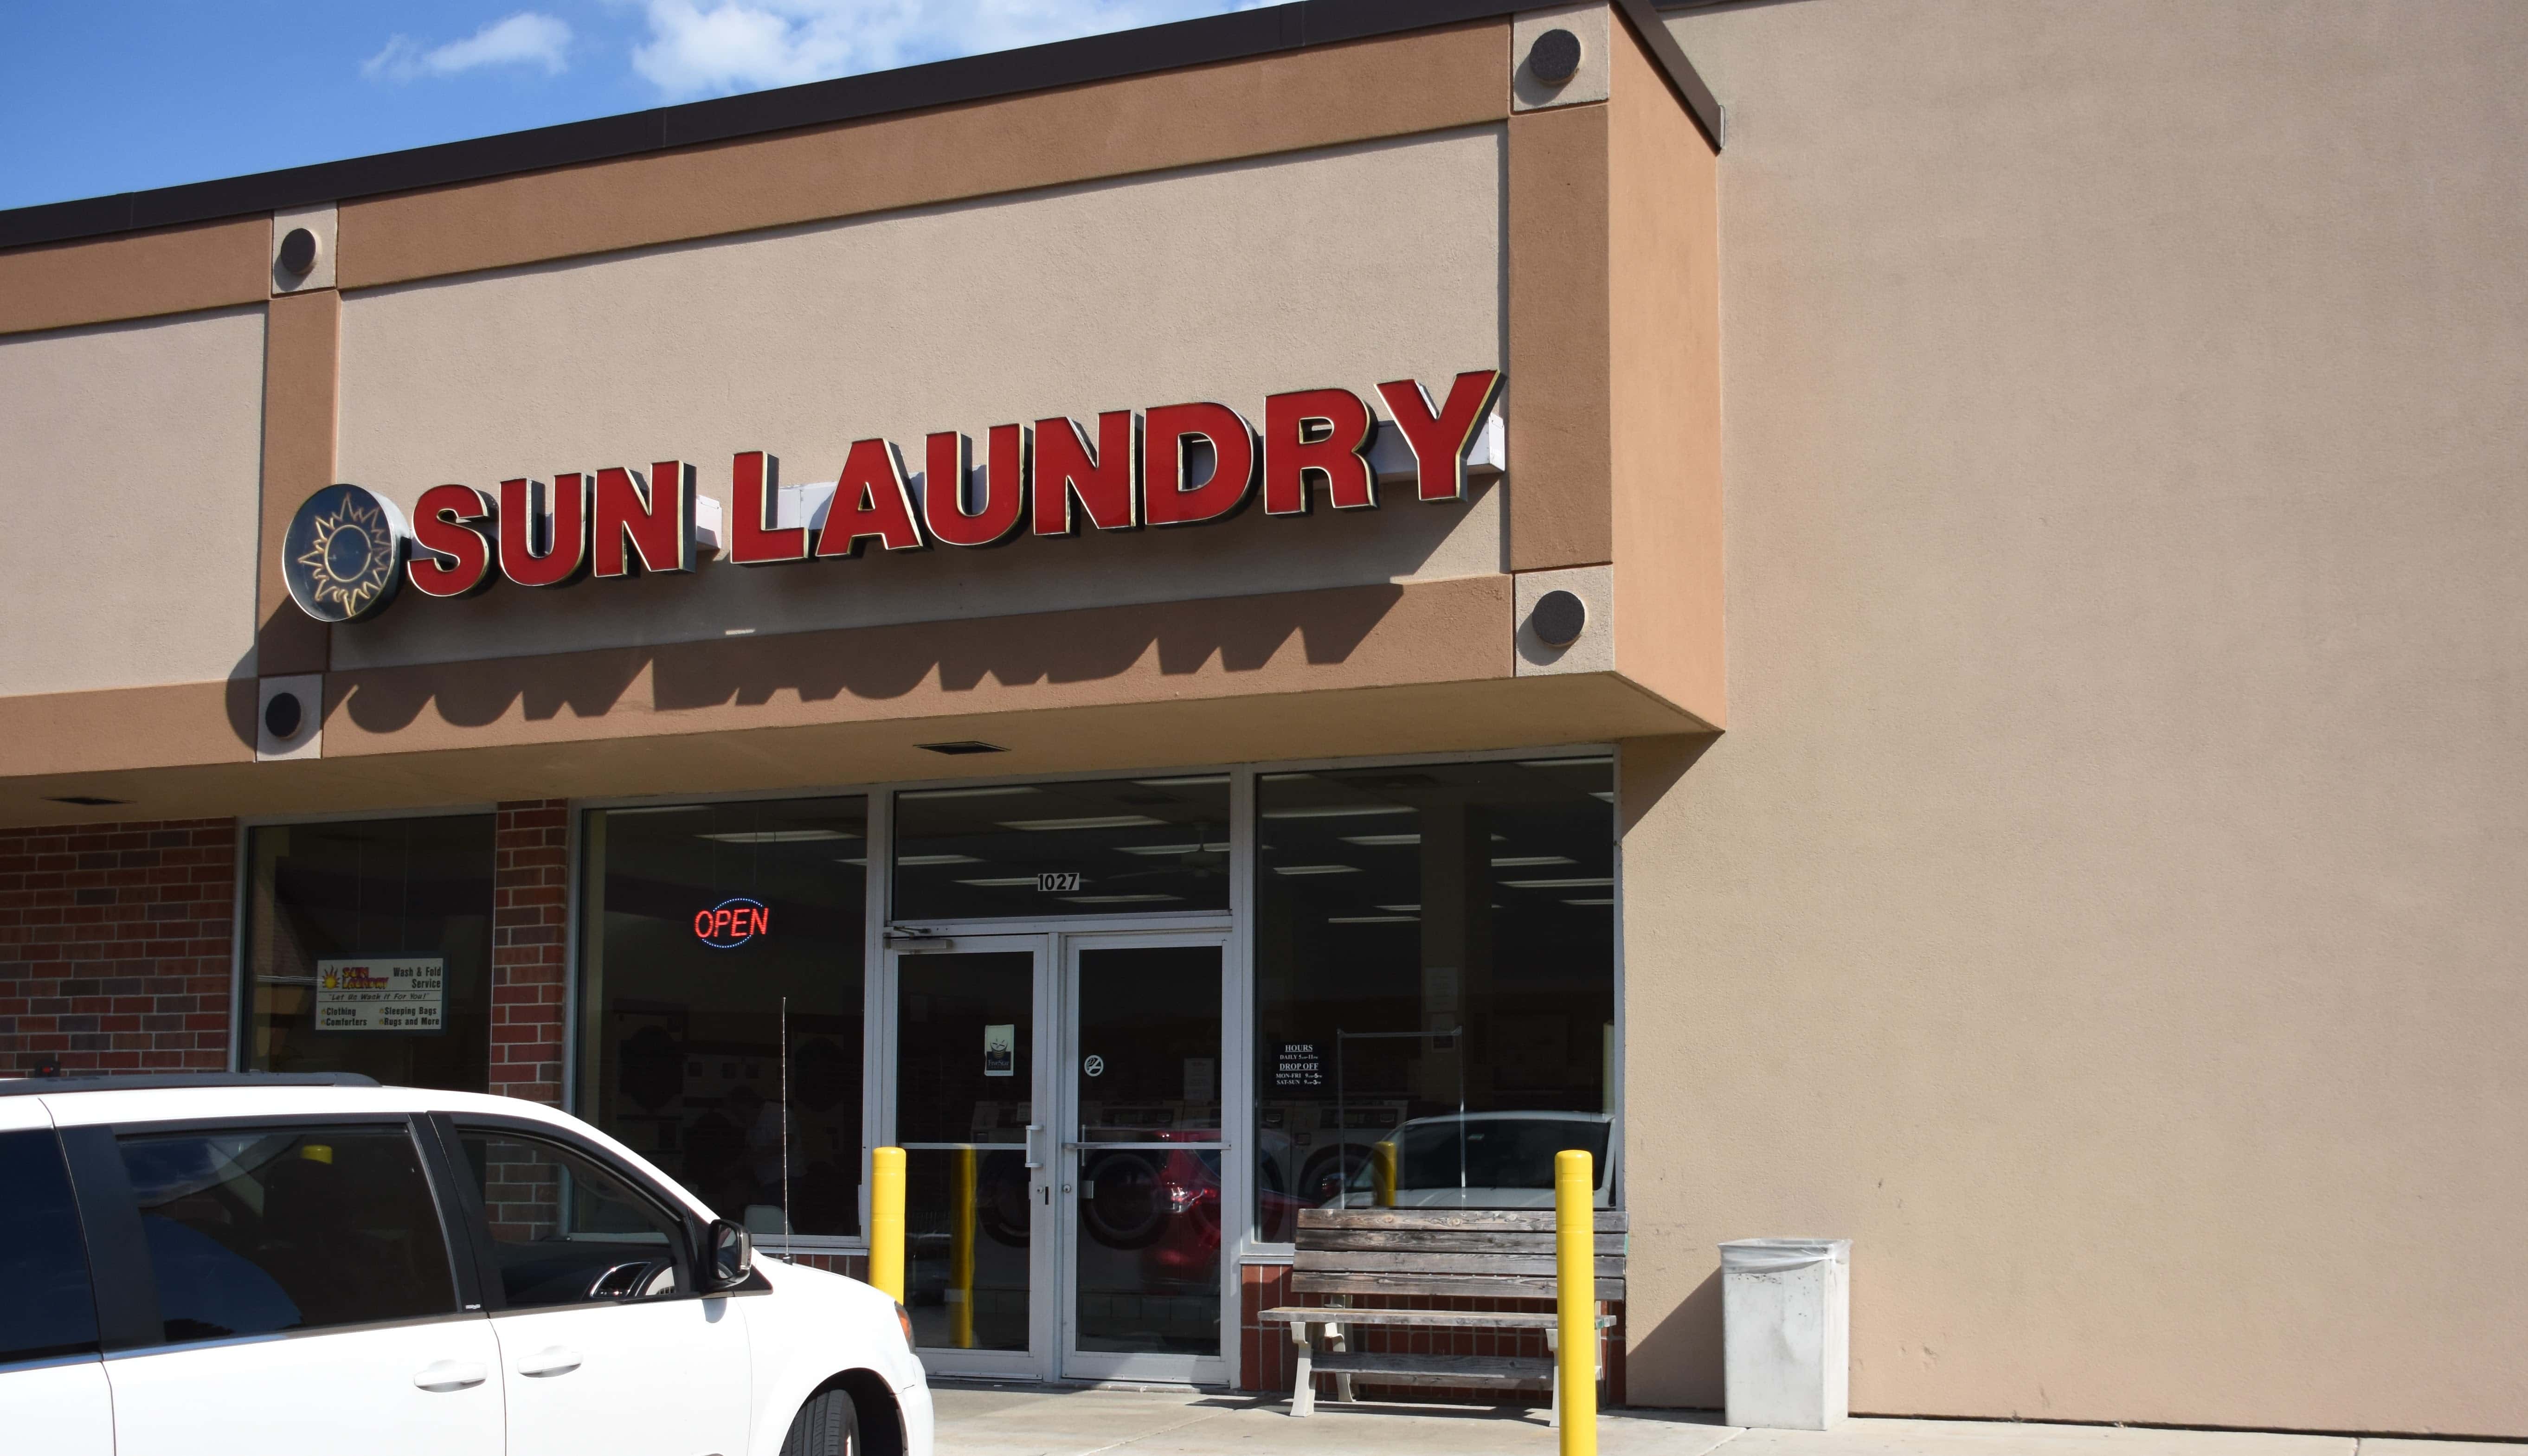 Sun Laundry Super Coin Lndrmt - Oconomowoc, WI, US, 24 hour washateria near me